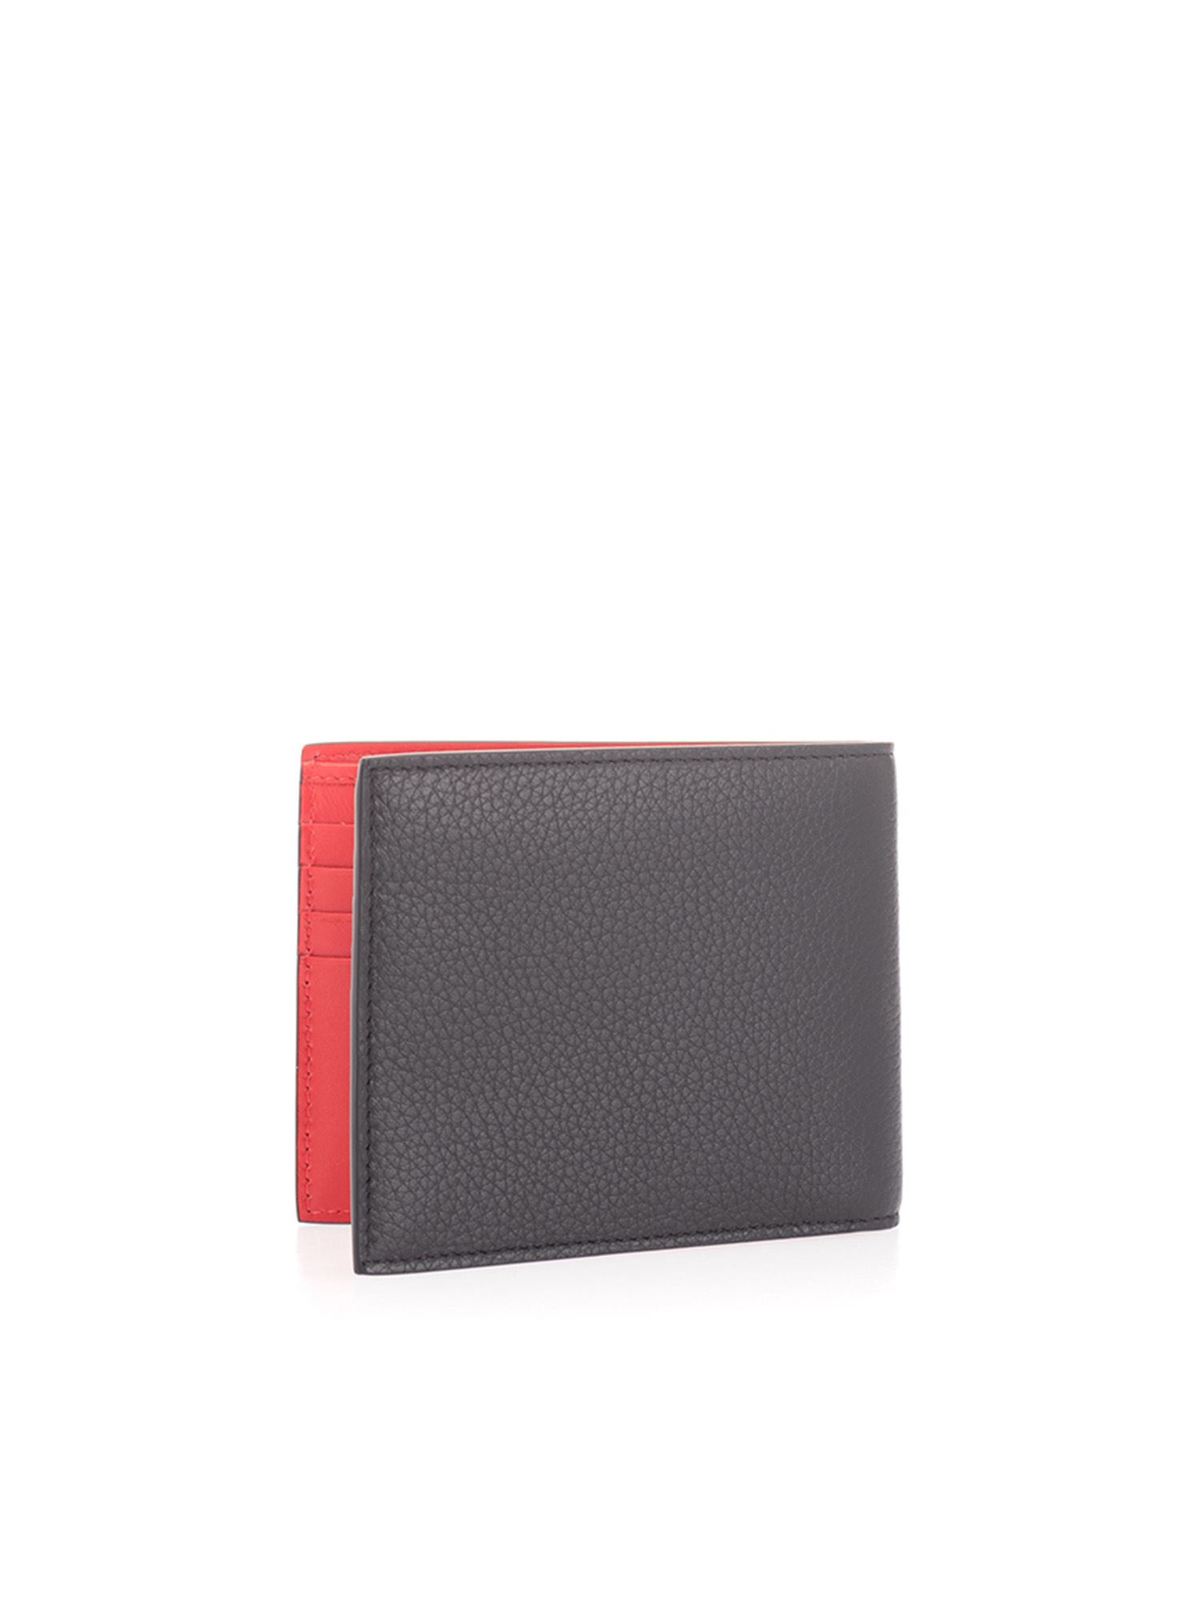 Wallets & purses Christian Louboutin - Coolcard wallet in black ...